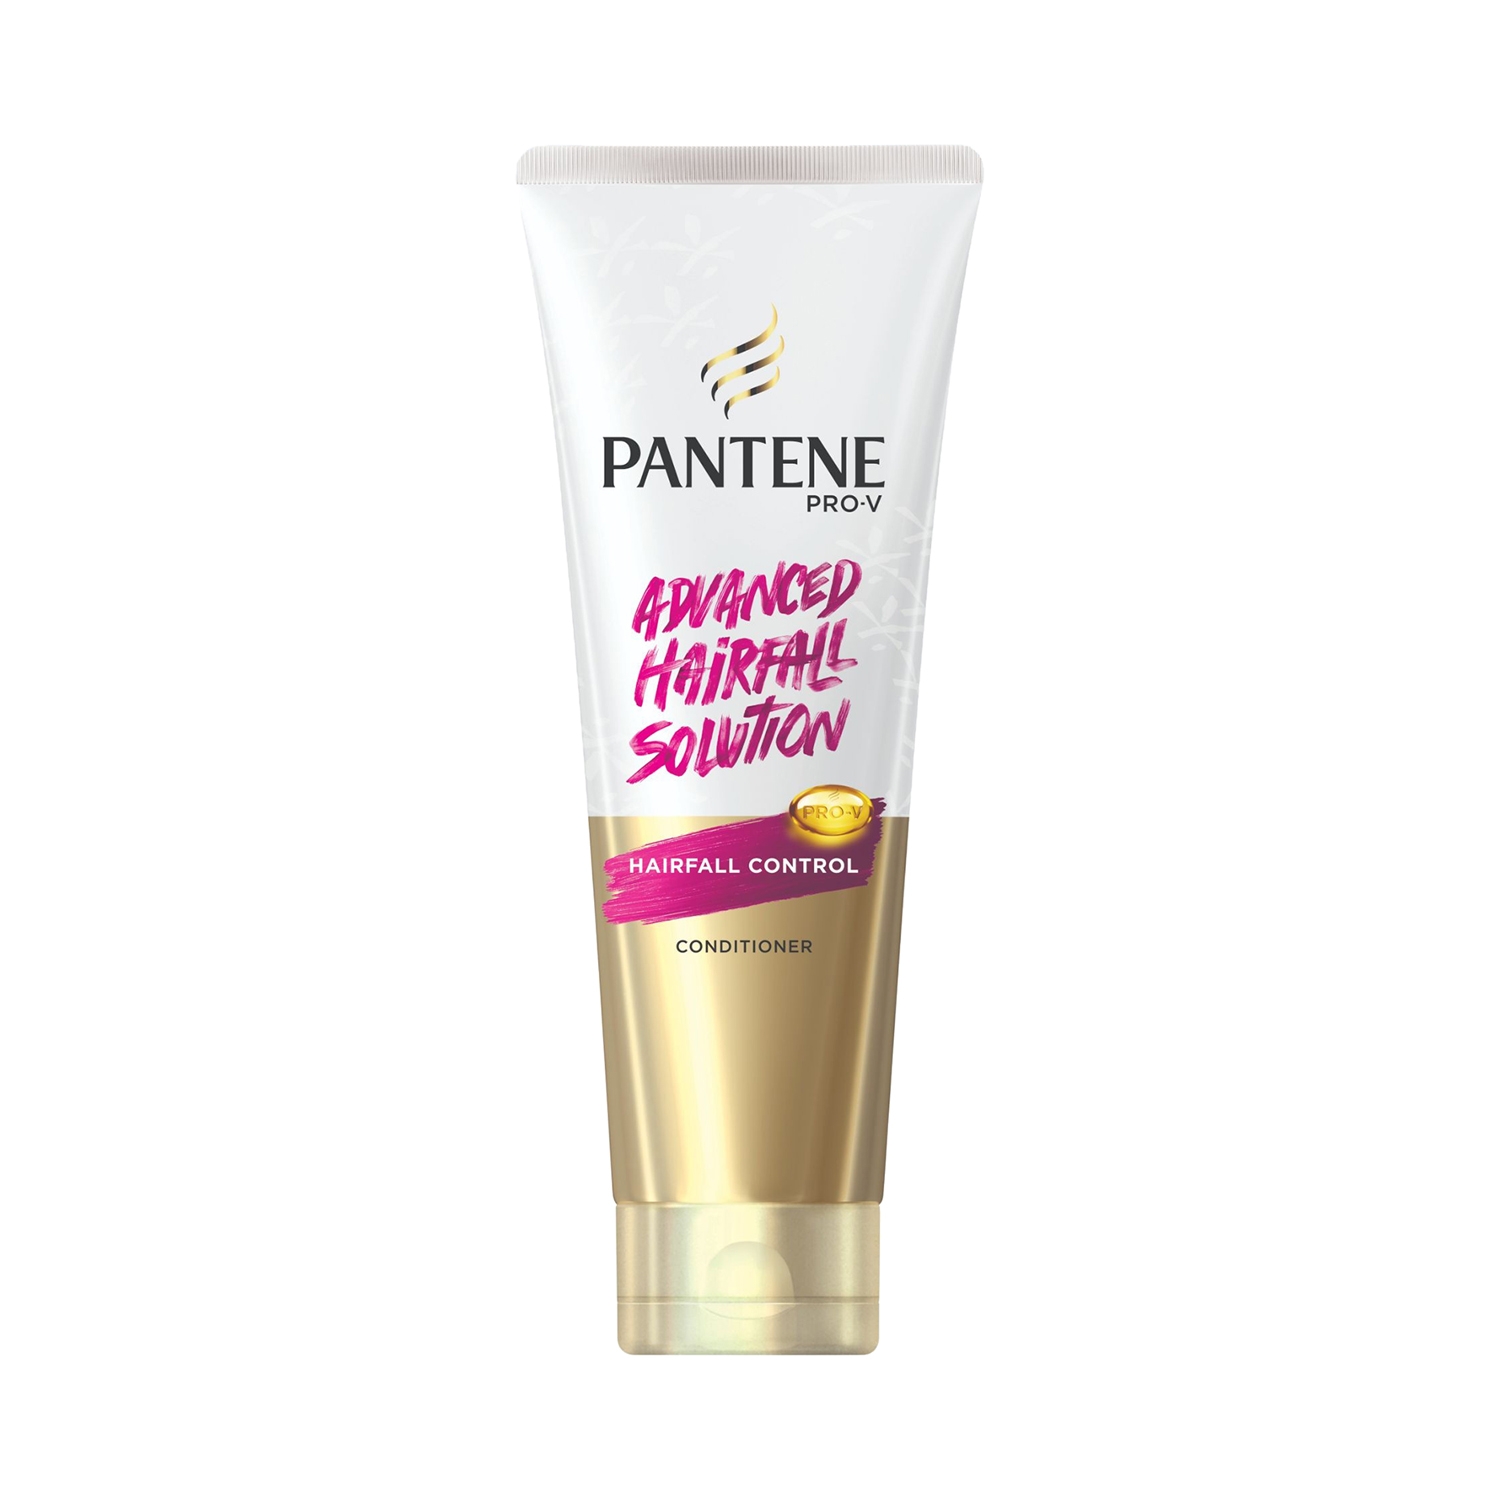 Pantene | Pantene Advanced Hairfall Solution Anti-Hairfall Conditioner (180ml)